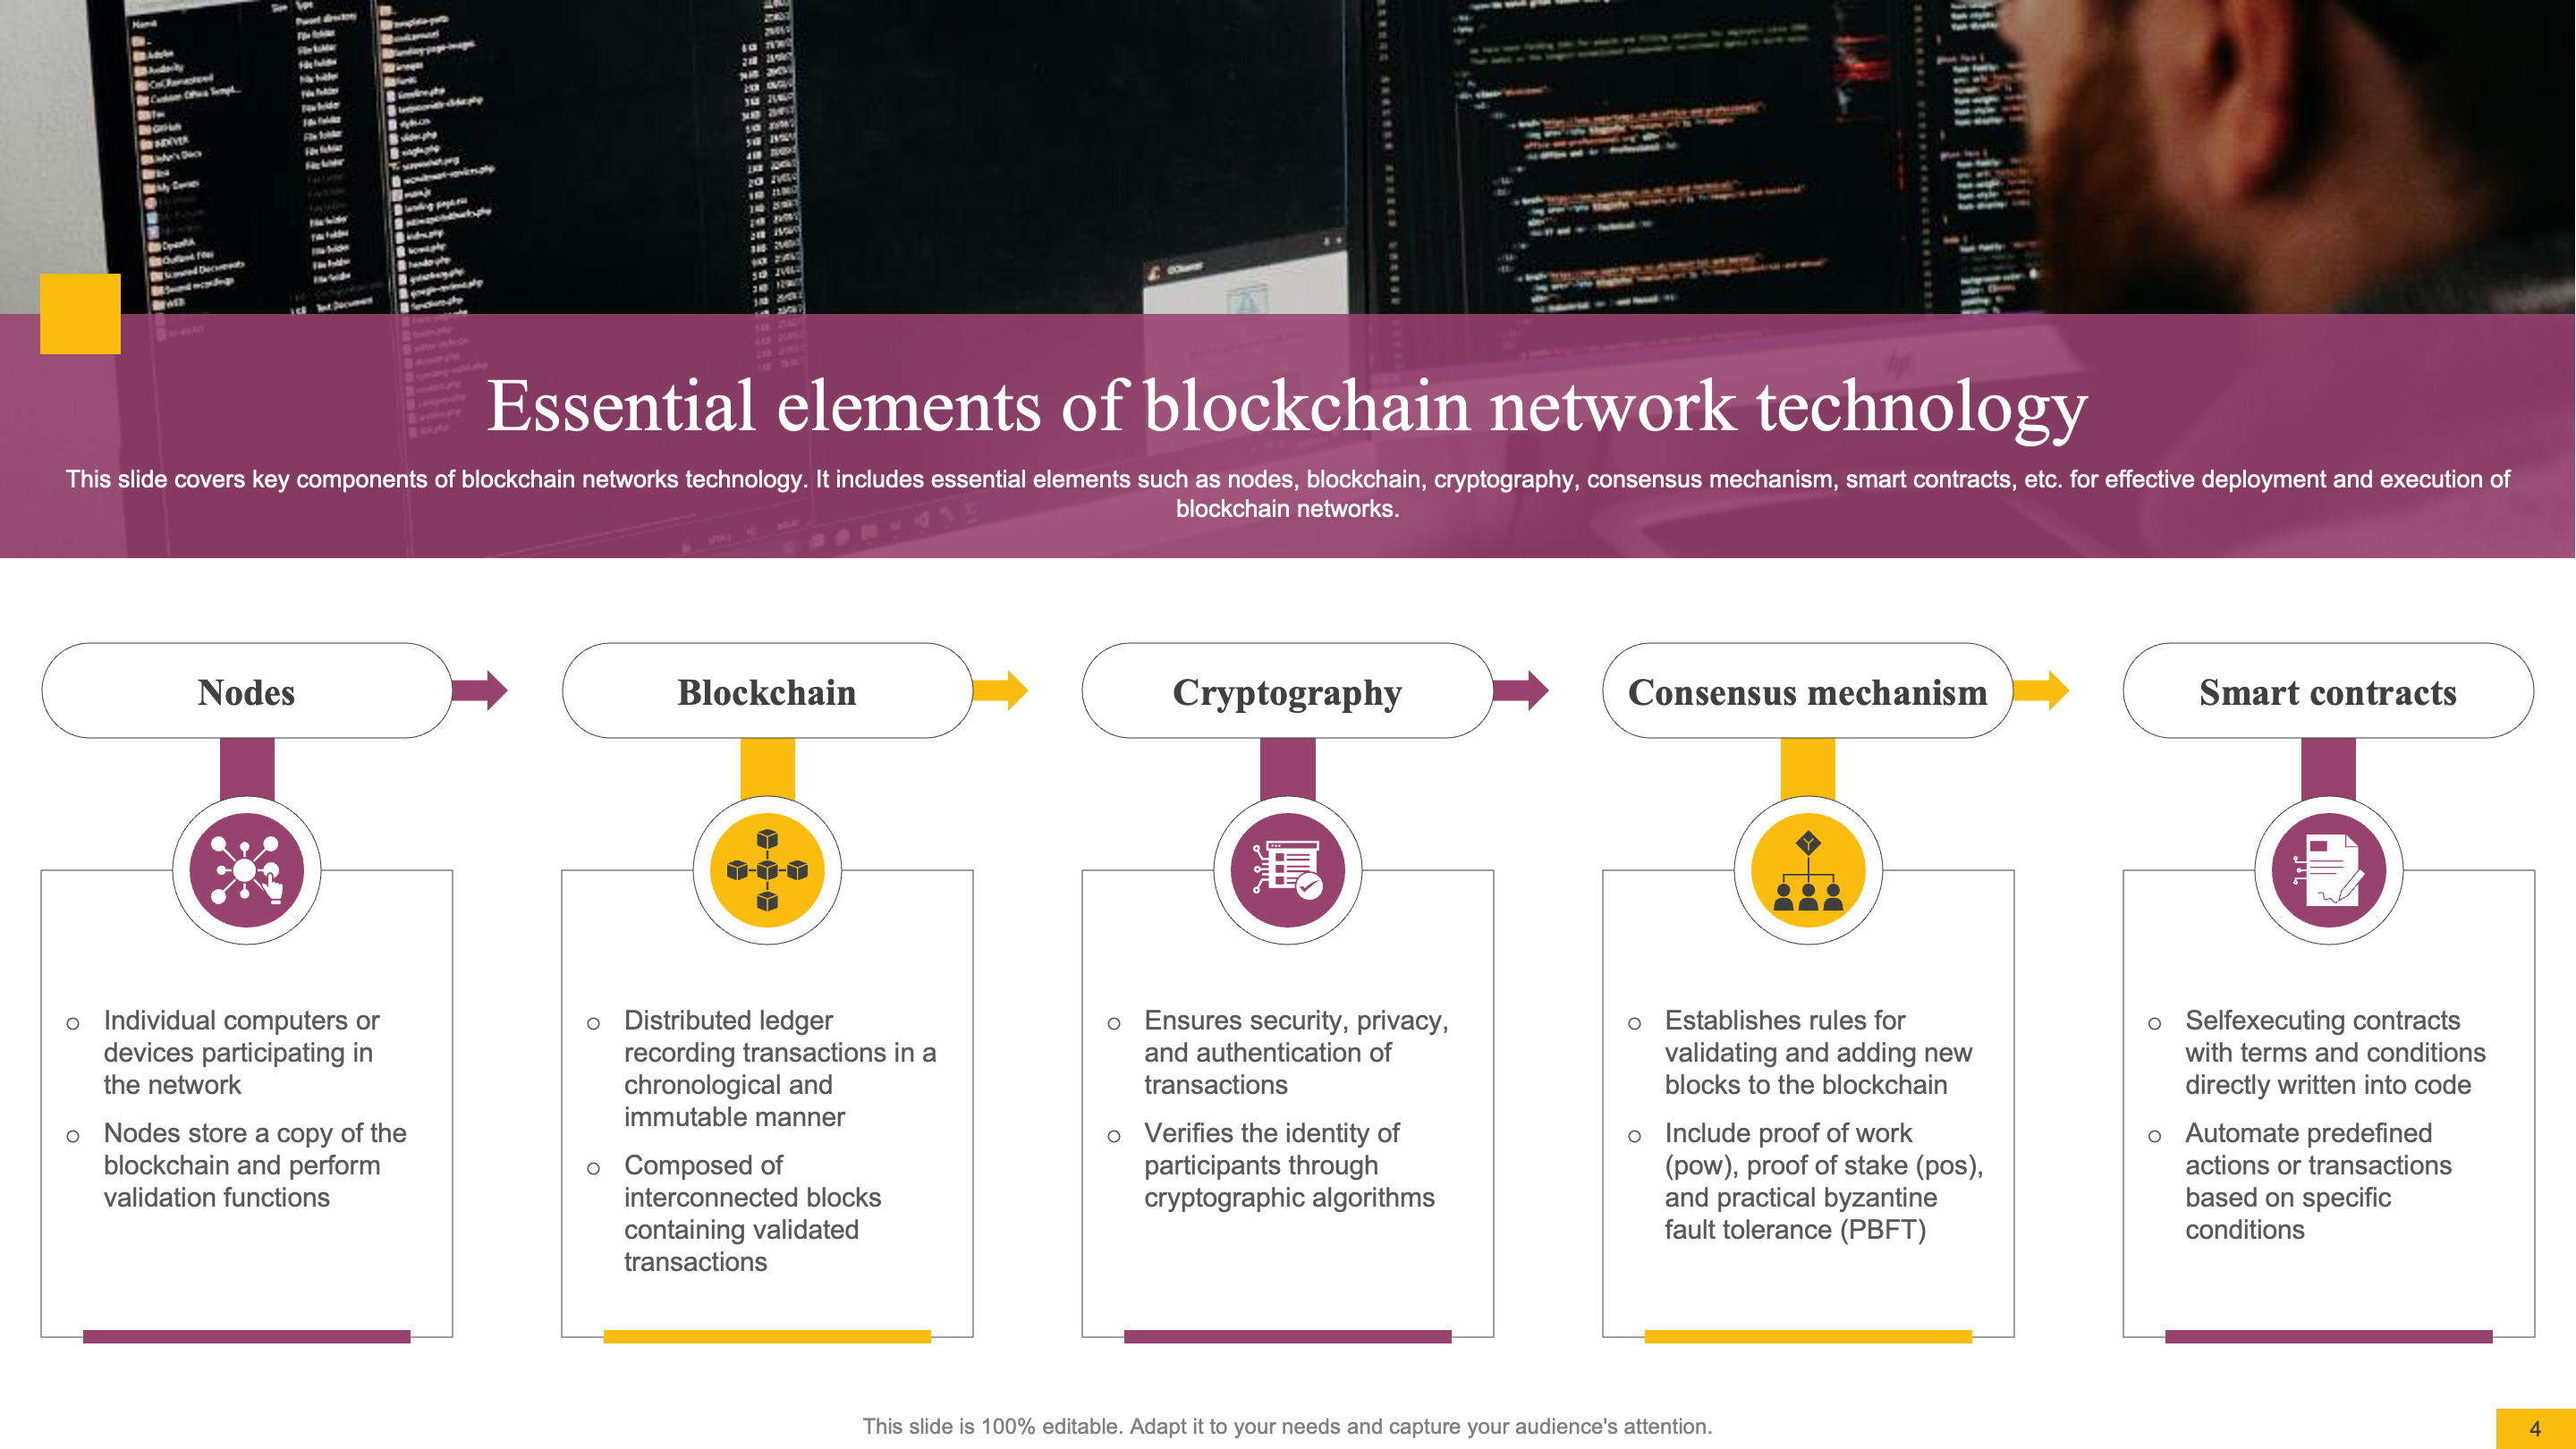 Essential elements of blockchain network technology